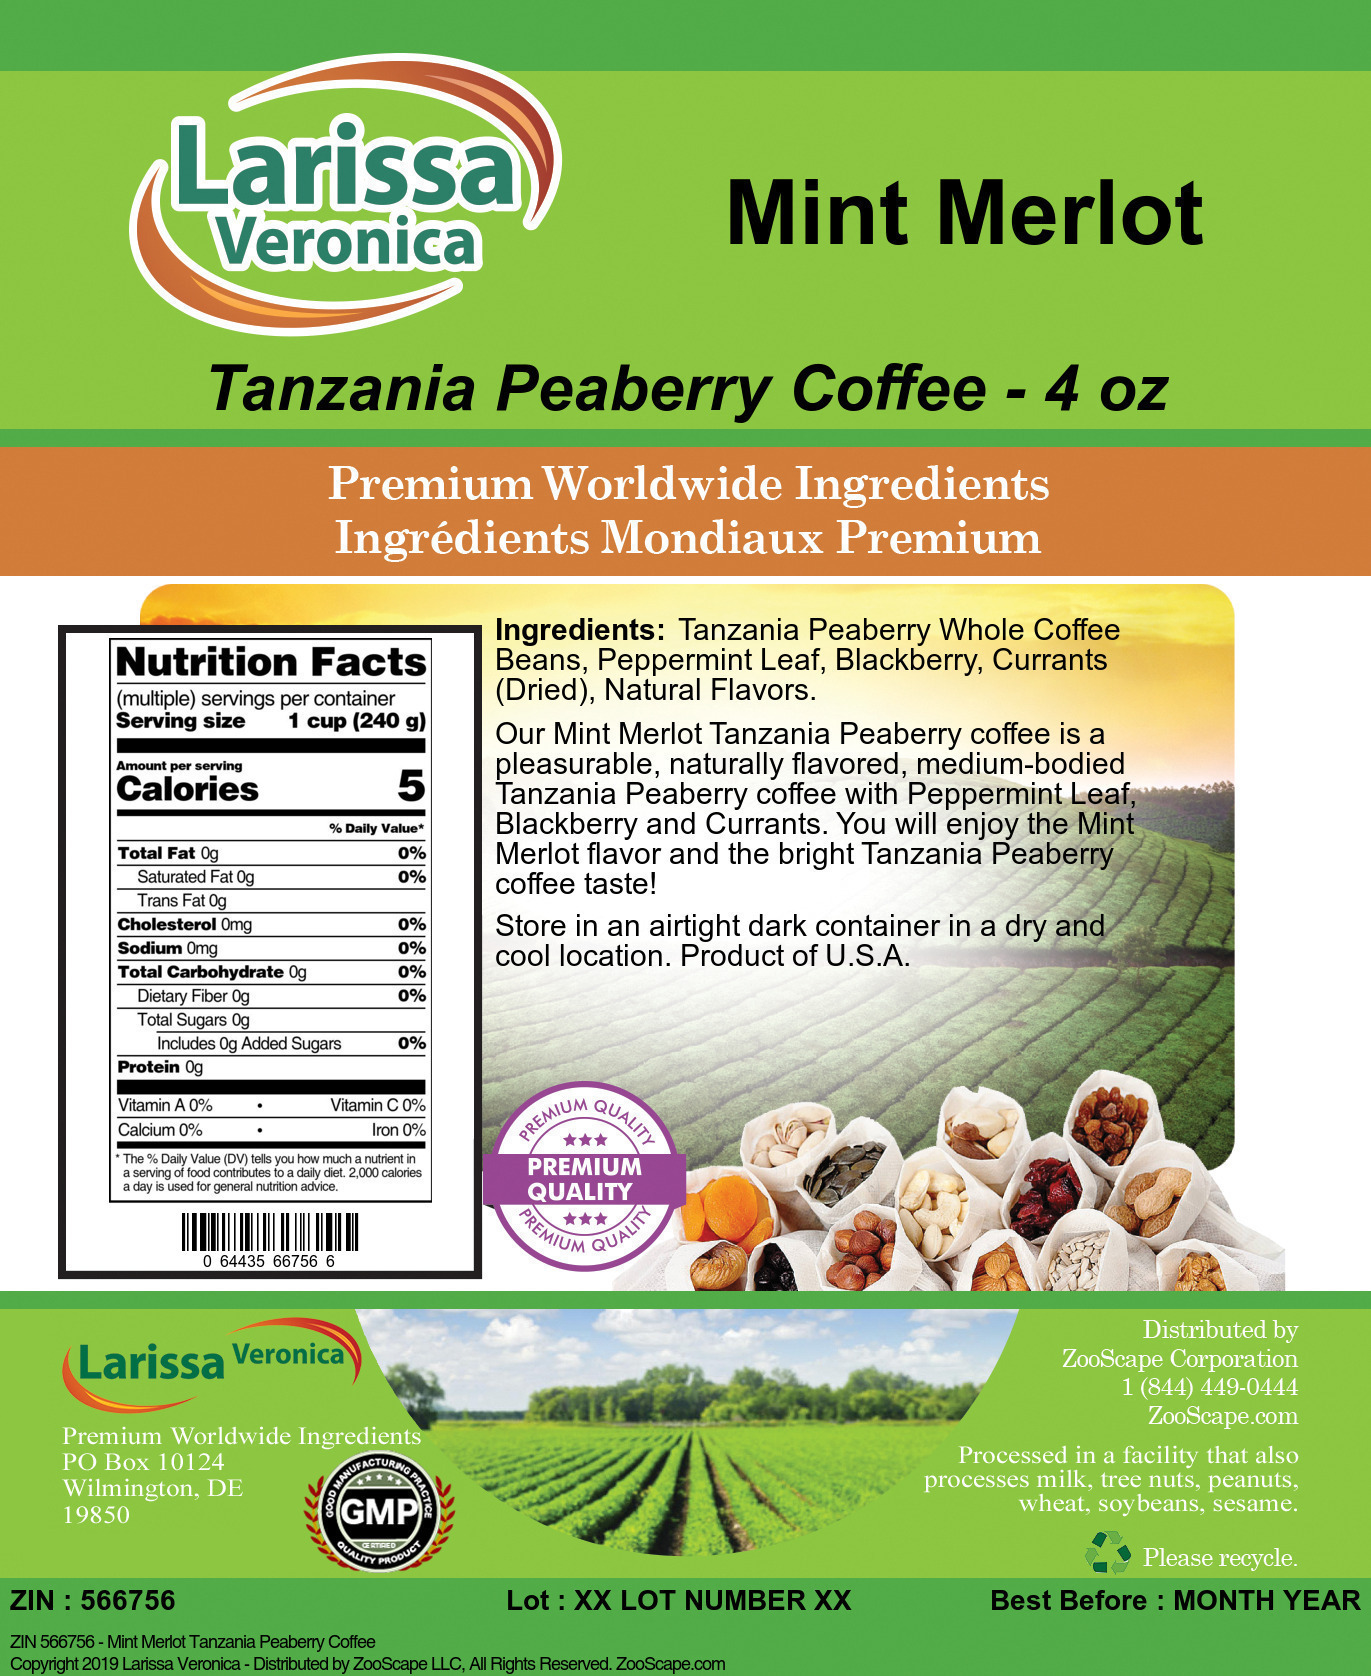 Mint Merlot Tanzania Peaberry Coffee - Label